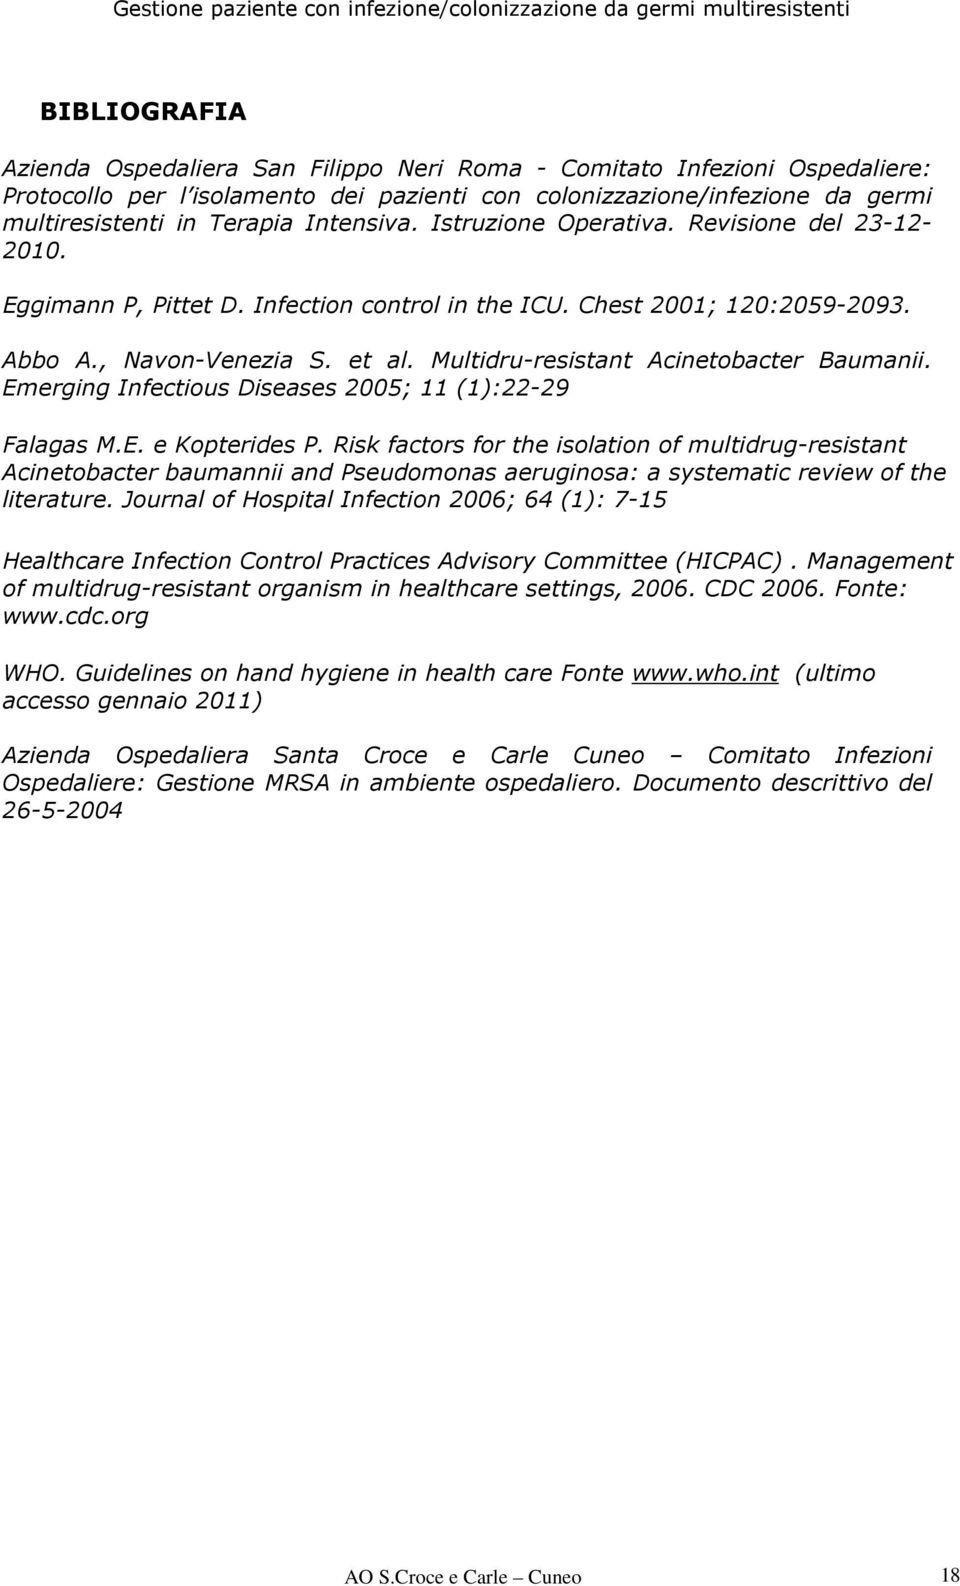 Multidru-resistant Acinetobacter Baumanii. Emerging Infectious Diseases 2005; 11 (1):22-29 Falagas M.E. e Kopterides P.